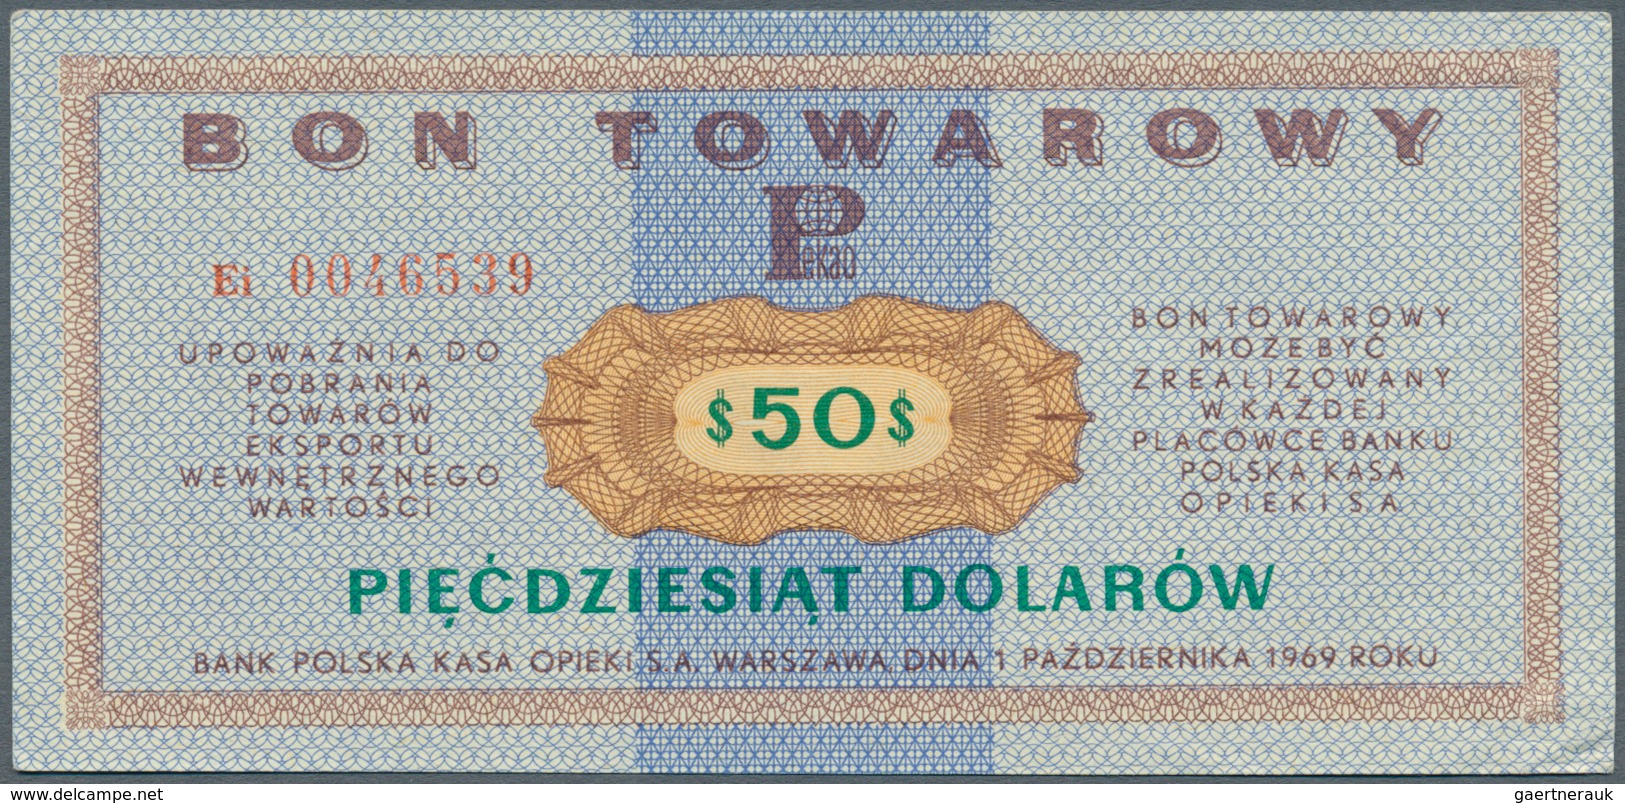 Poland / Polen: Bon Towarowy 50 Dolarow 1969, P.FX32, Edge Bend At Lower Right, Creases In The Paper - Polen